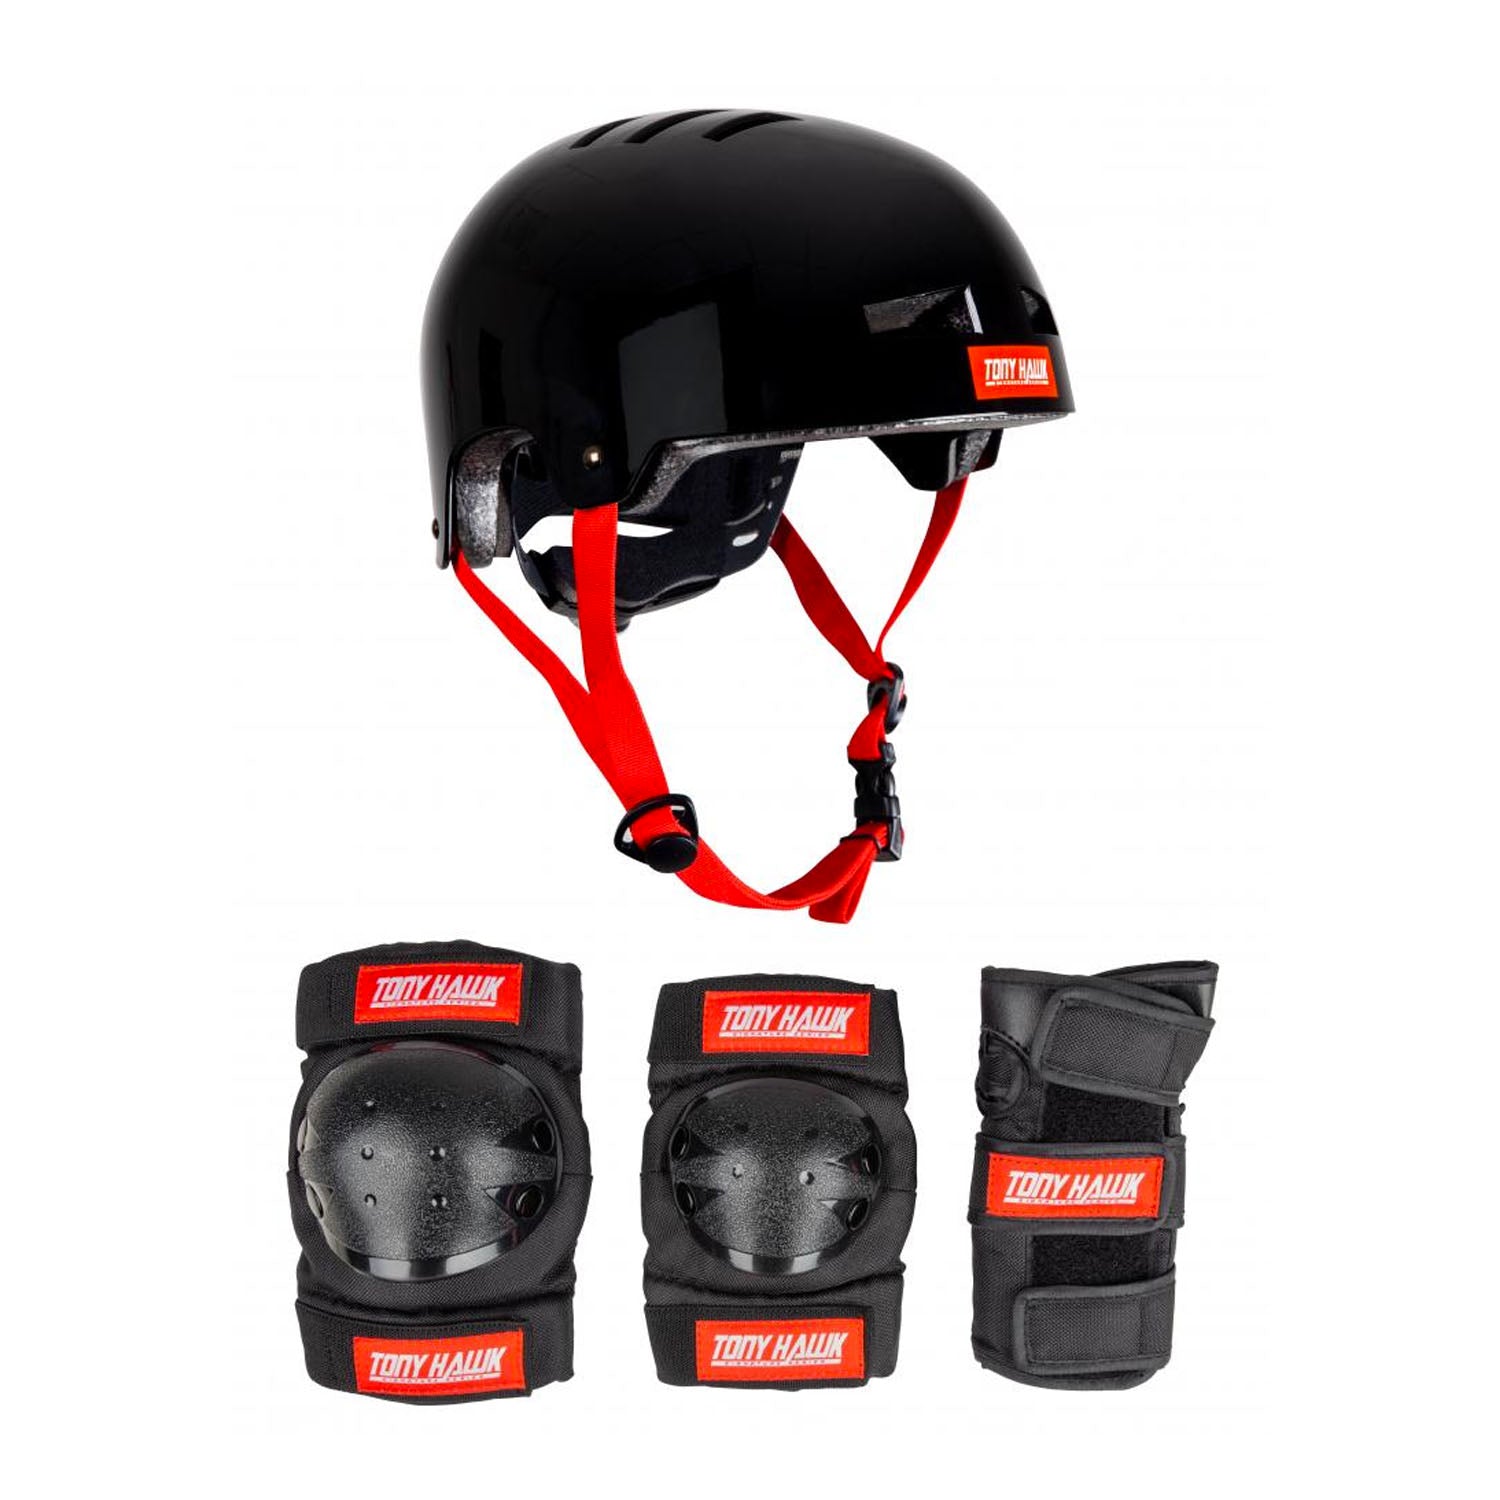 Tony Hawk Junior Protective Set Helmet & Padset - Black/Red - Prime Delux Store